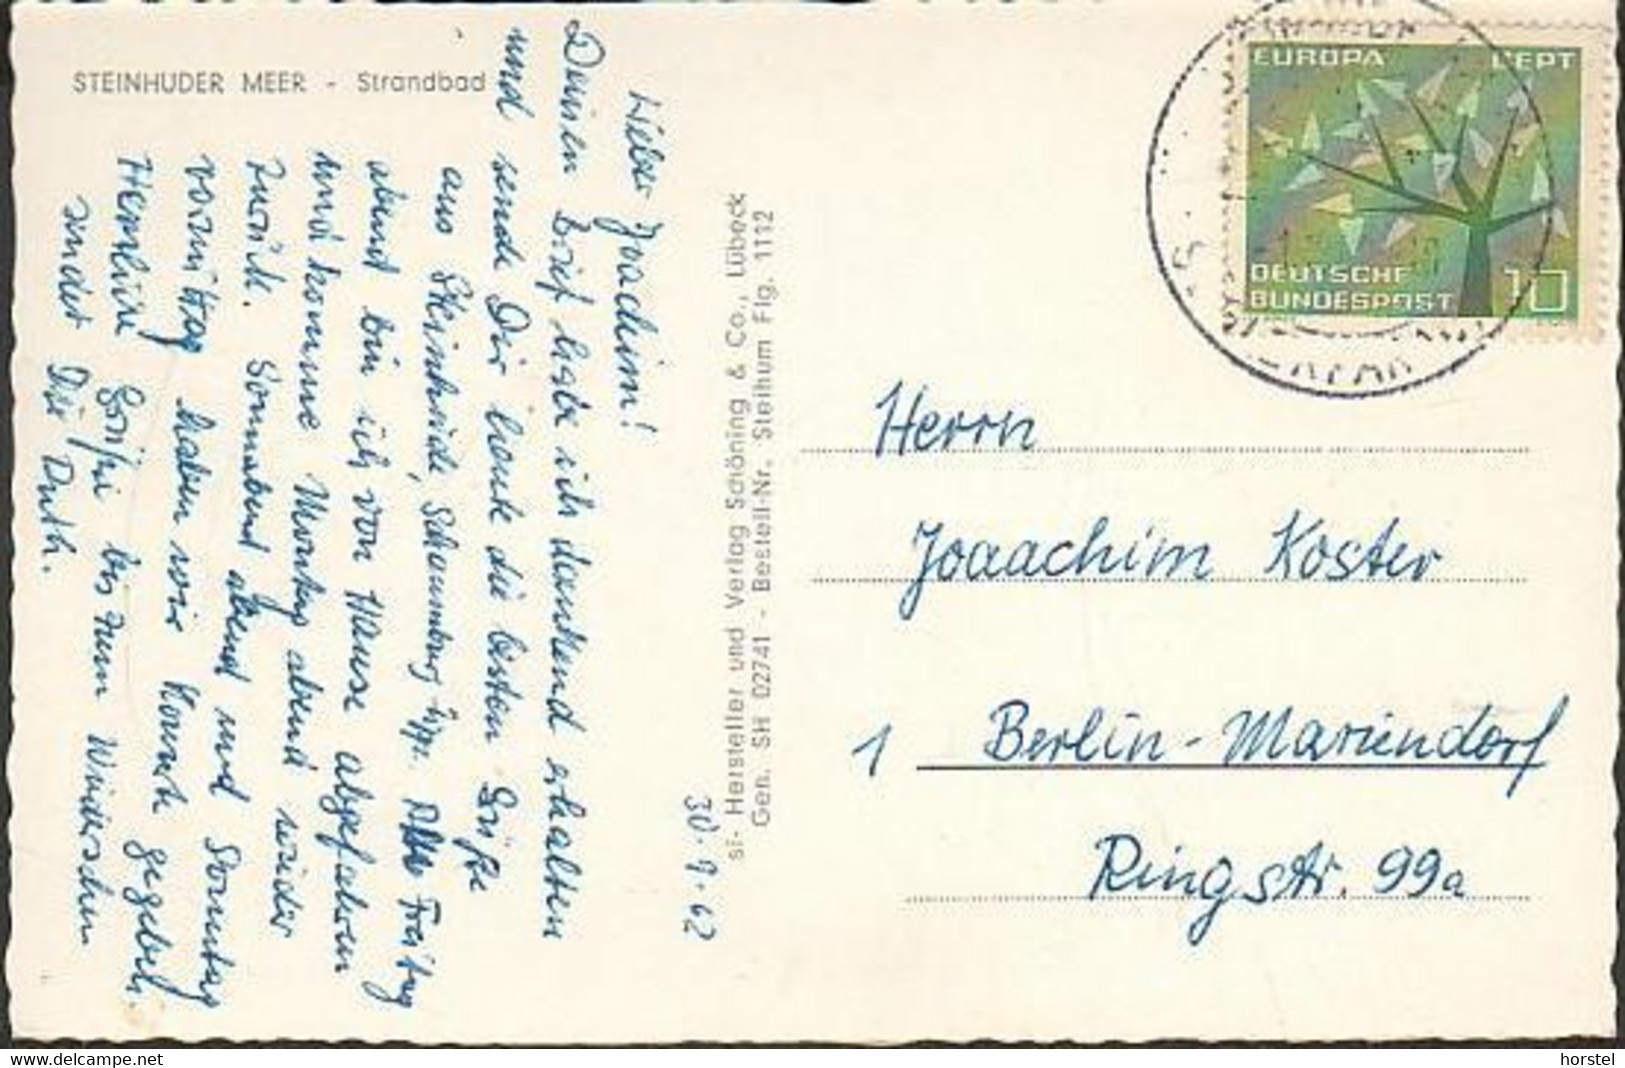 D-31515 Wunstorf - Steinhuder Meer - Strandbad - Luftbild - Air View - Nice Stamp "Cept 1962" - Steinhude